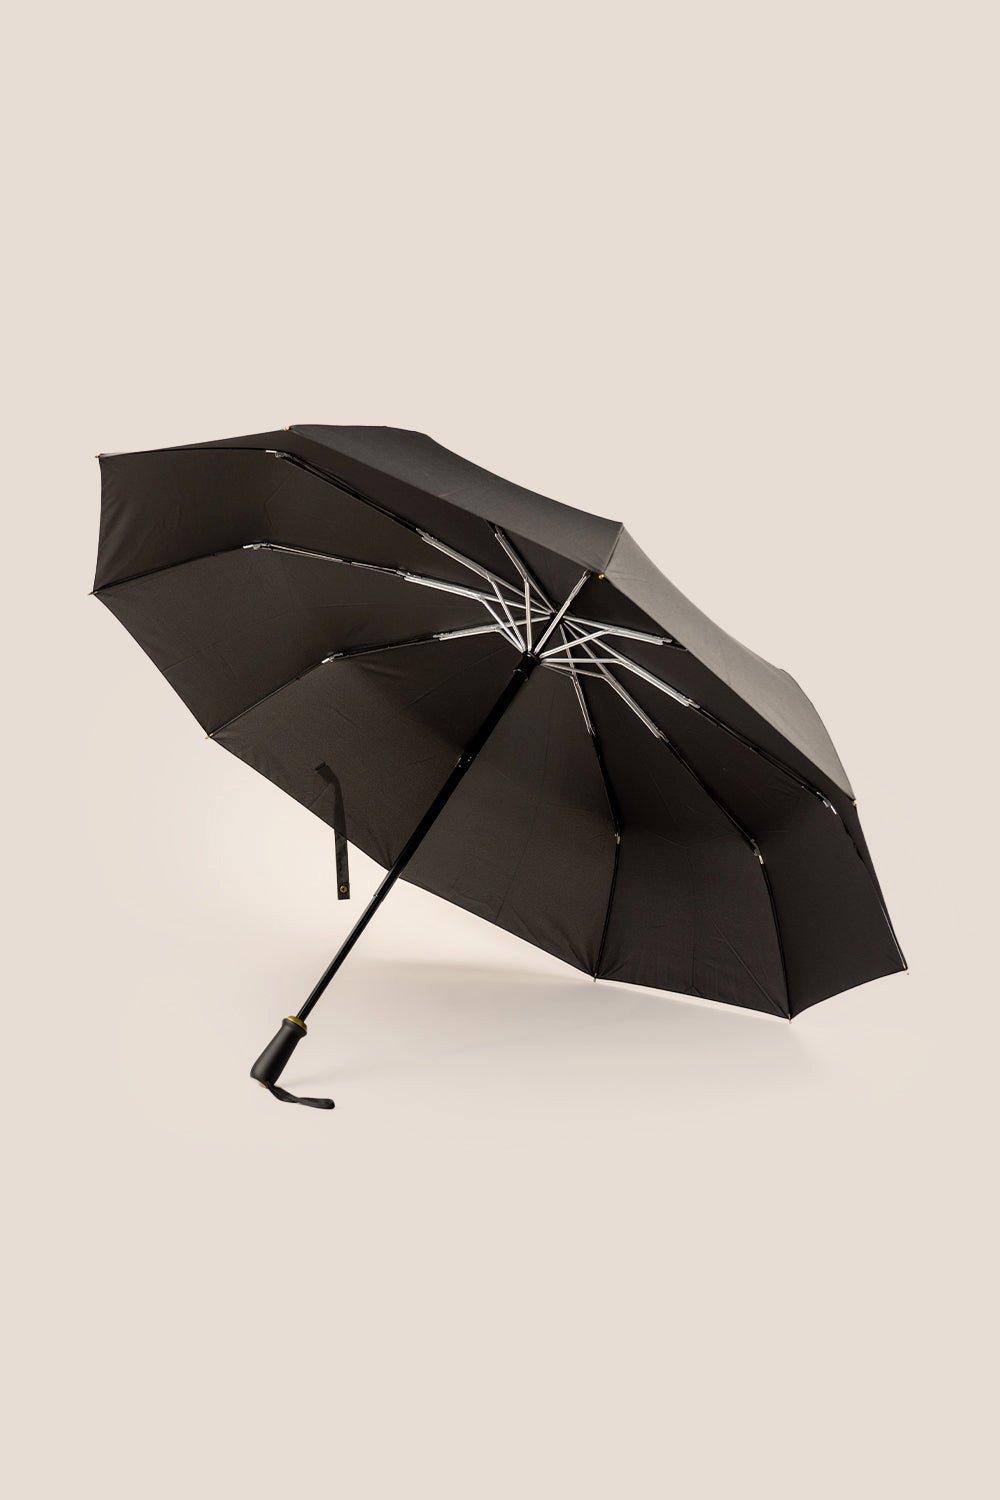 Paul Handcrafted Umbrella